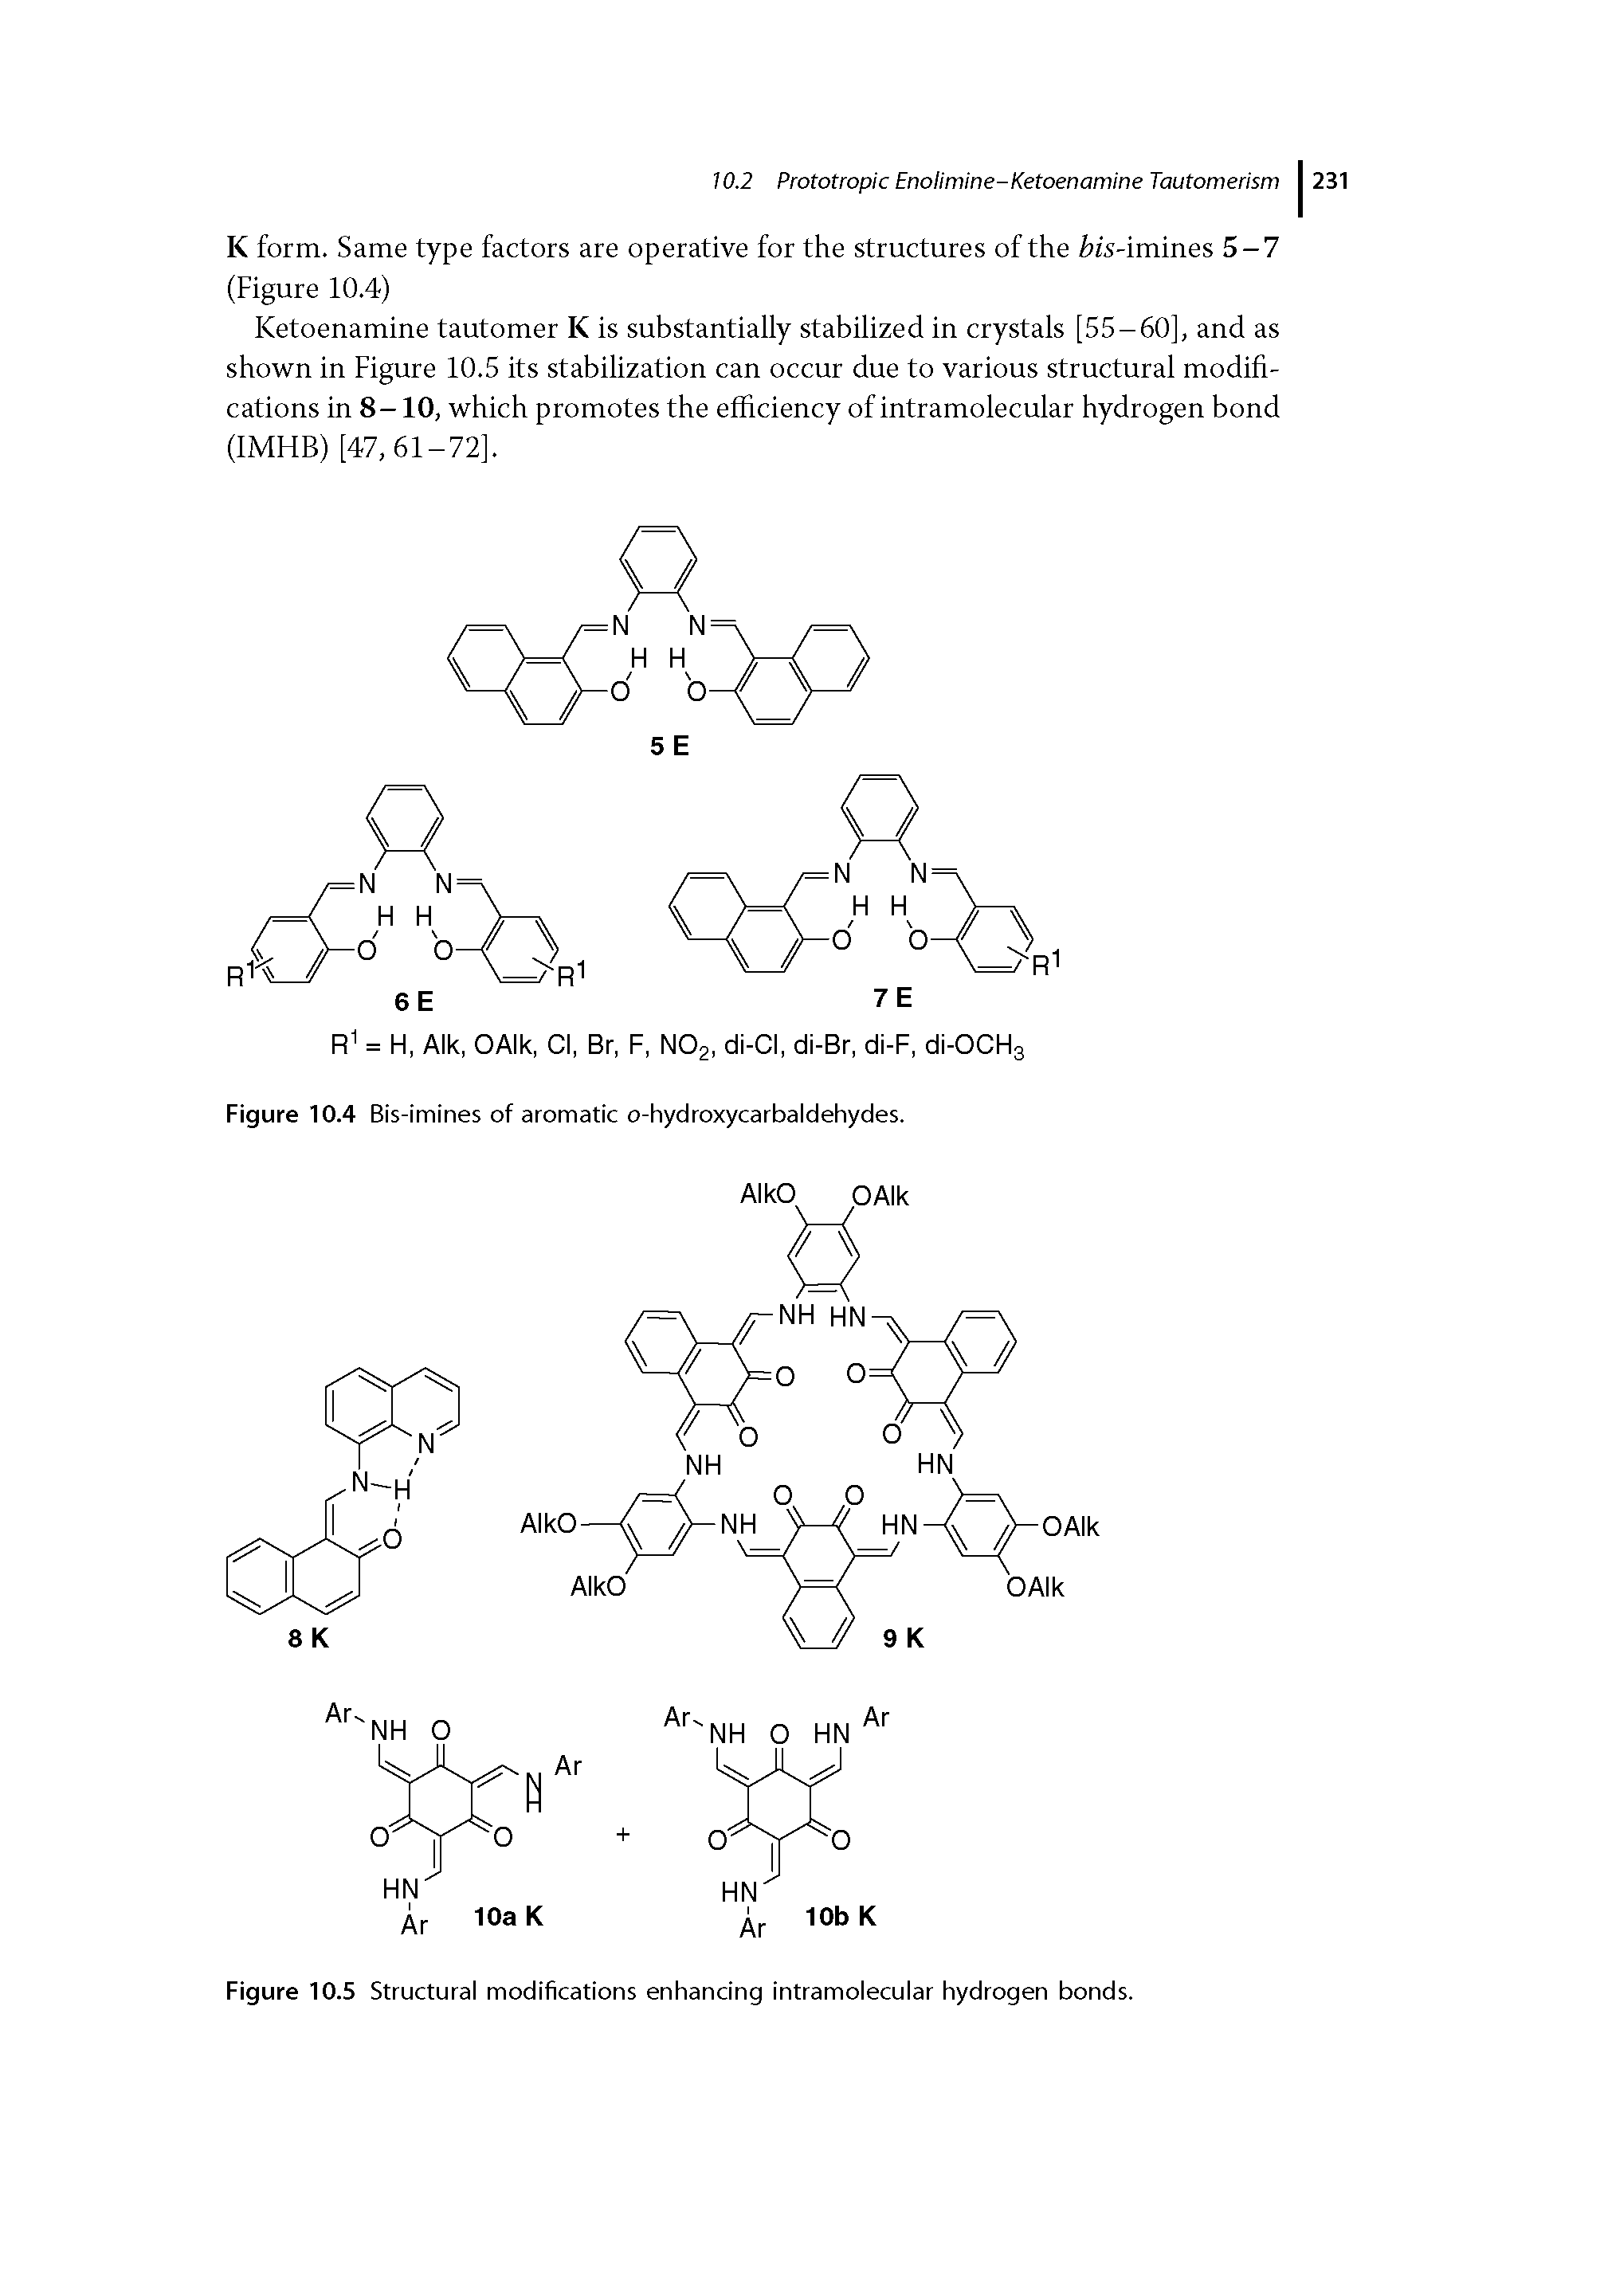 Figure 10.5 Structural modifications enhancing intramolecular hydrogen bonds.